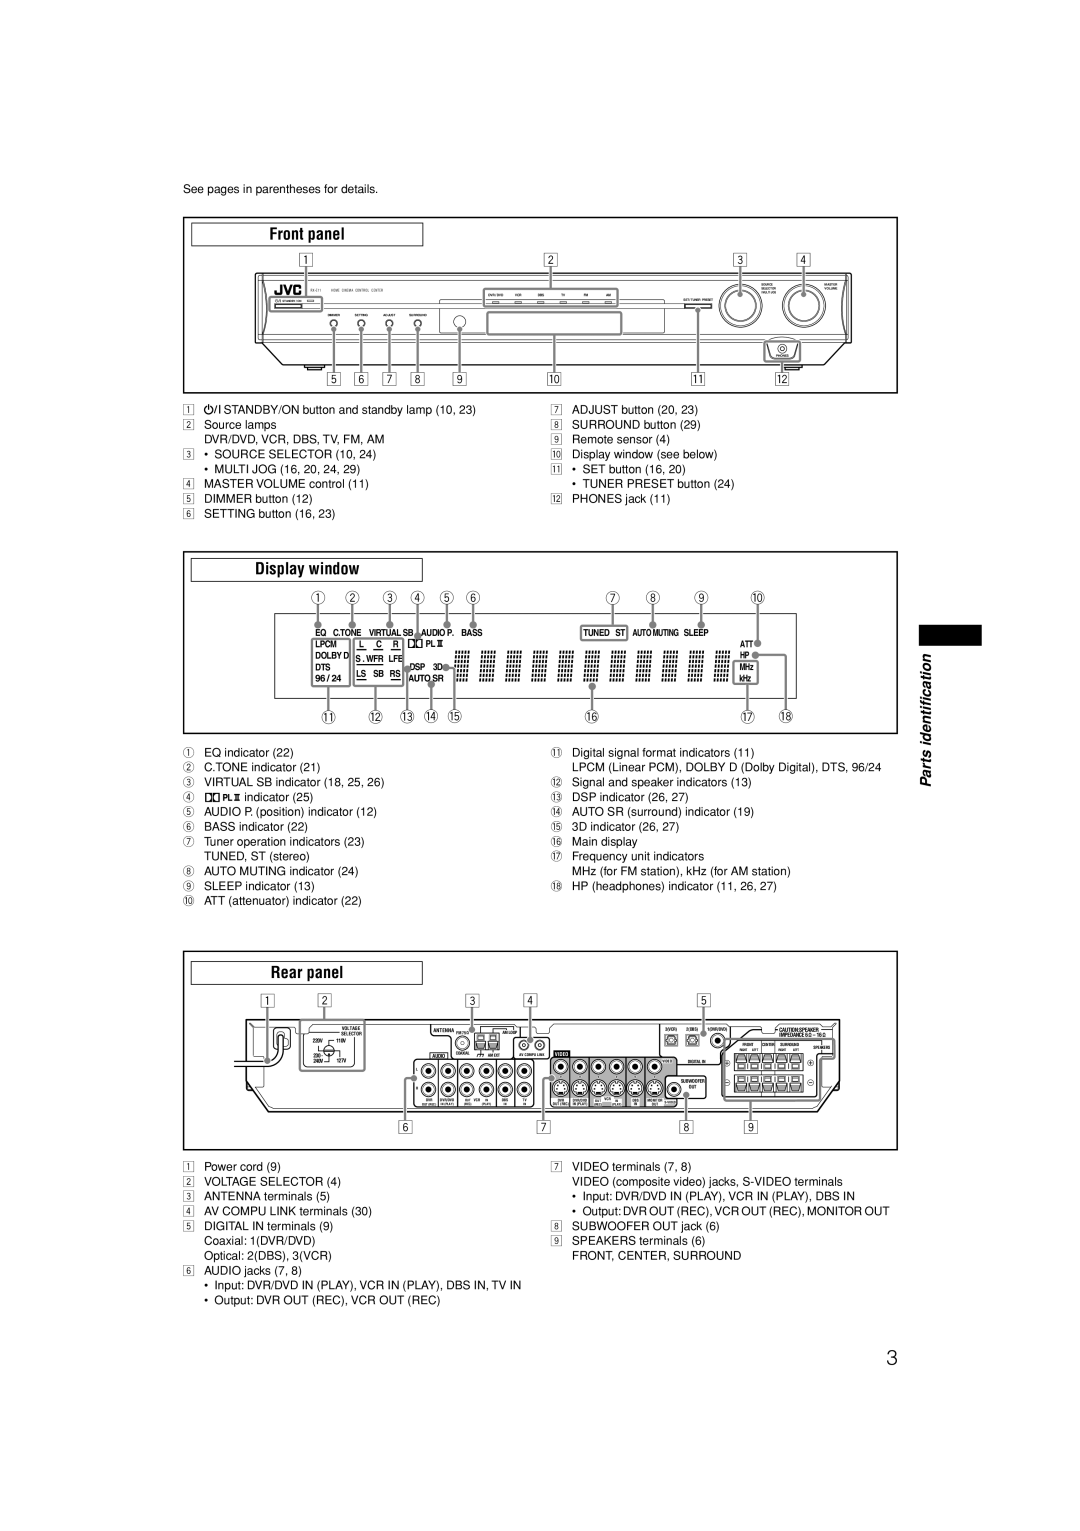 JVC RX-E11S manual Display window, Rear panel, 5 6 7, Parts identification 